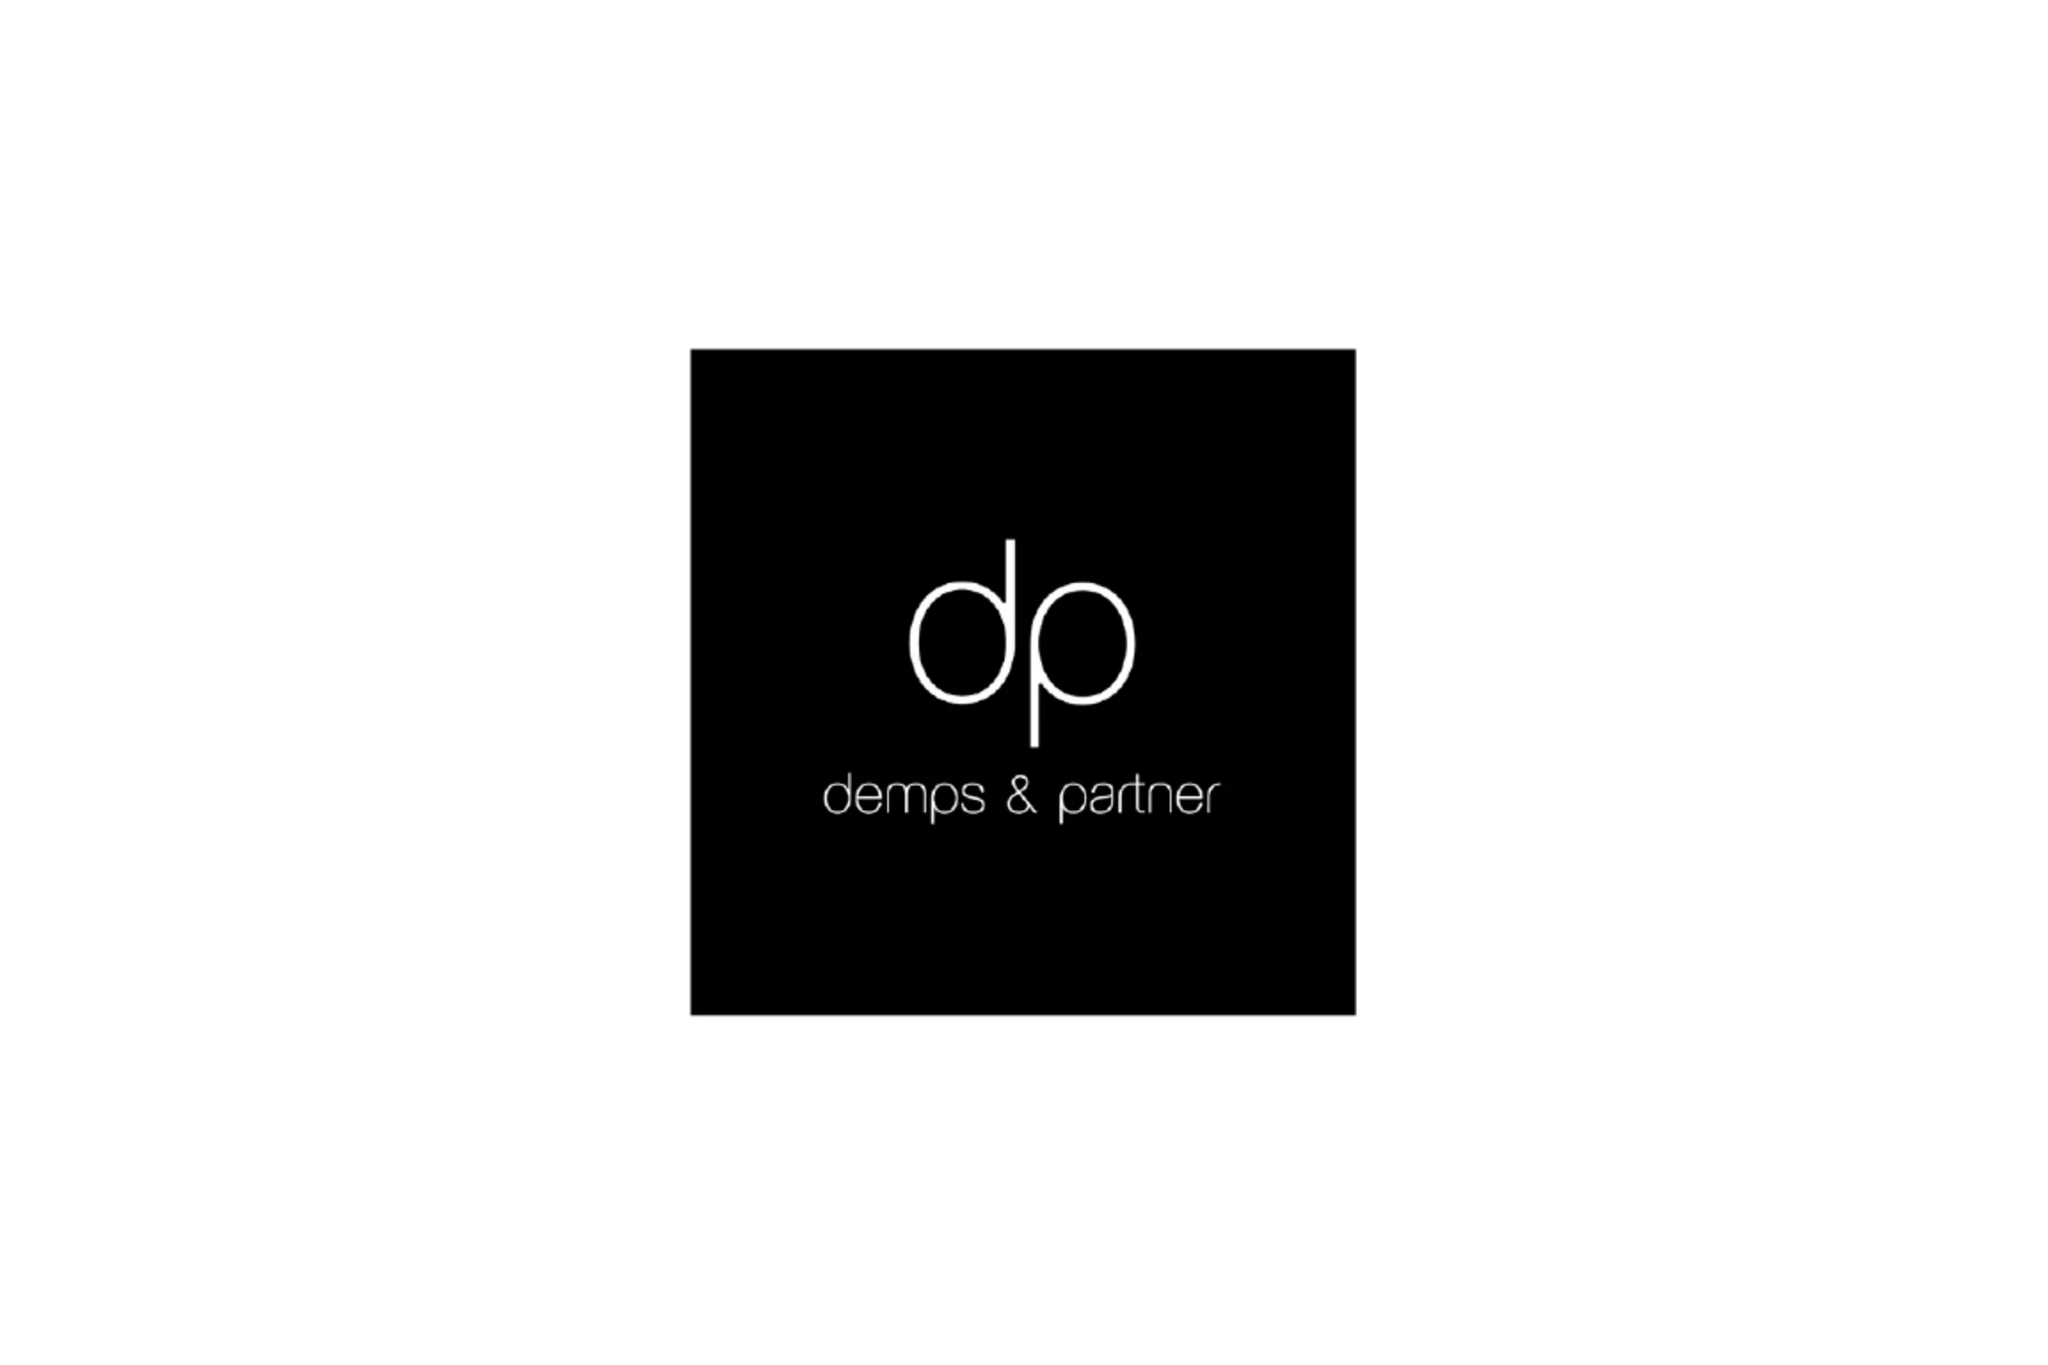 demps & partner logo